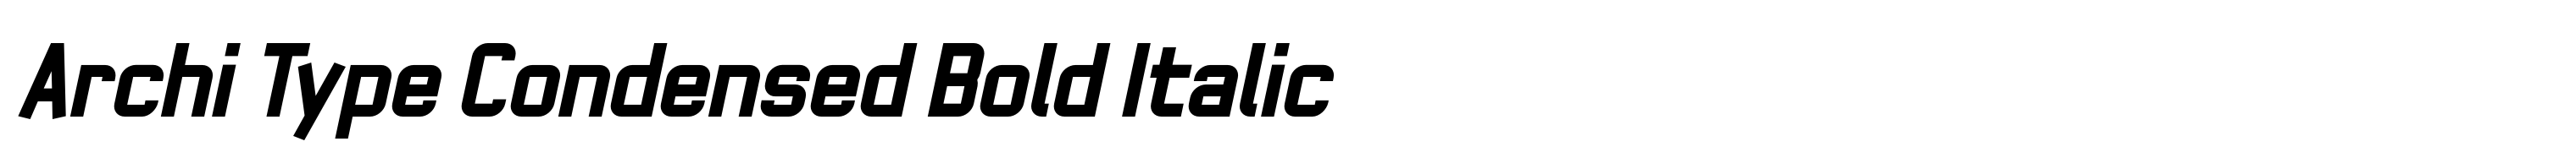 Archi Type Condensed Bold Italic